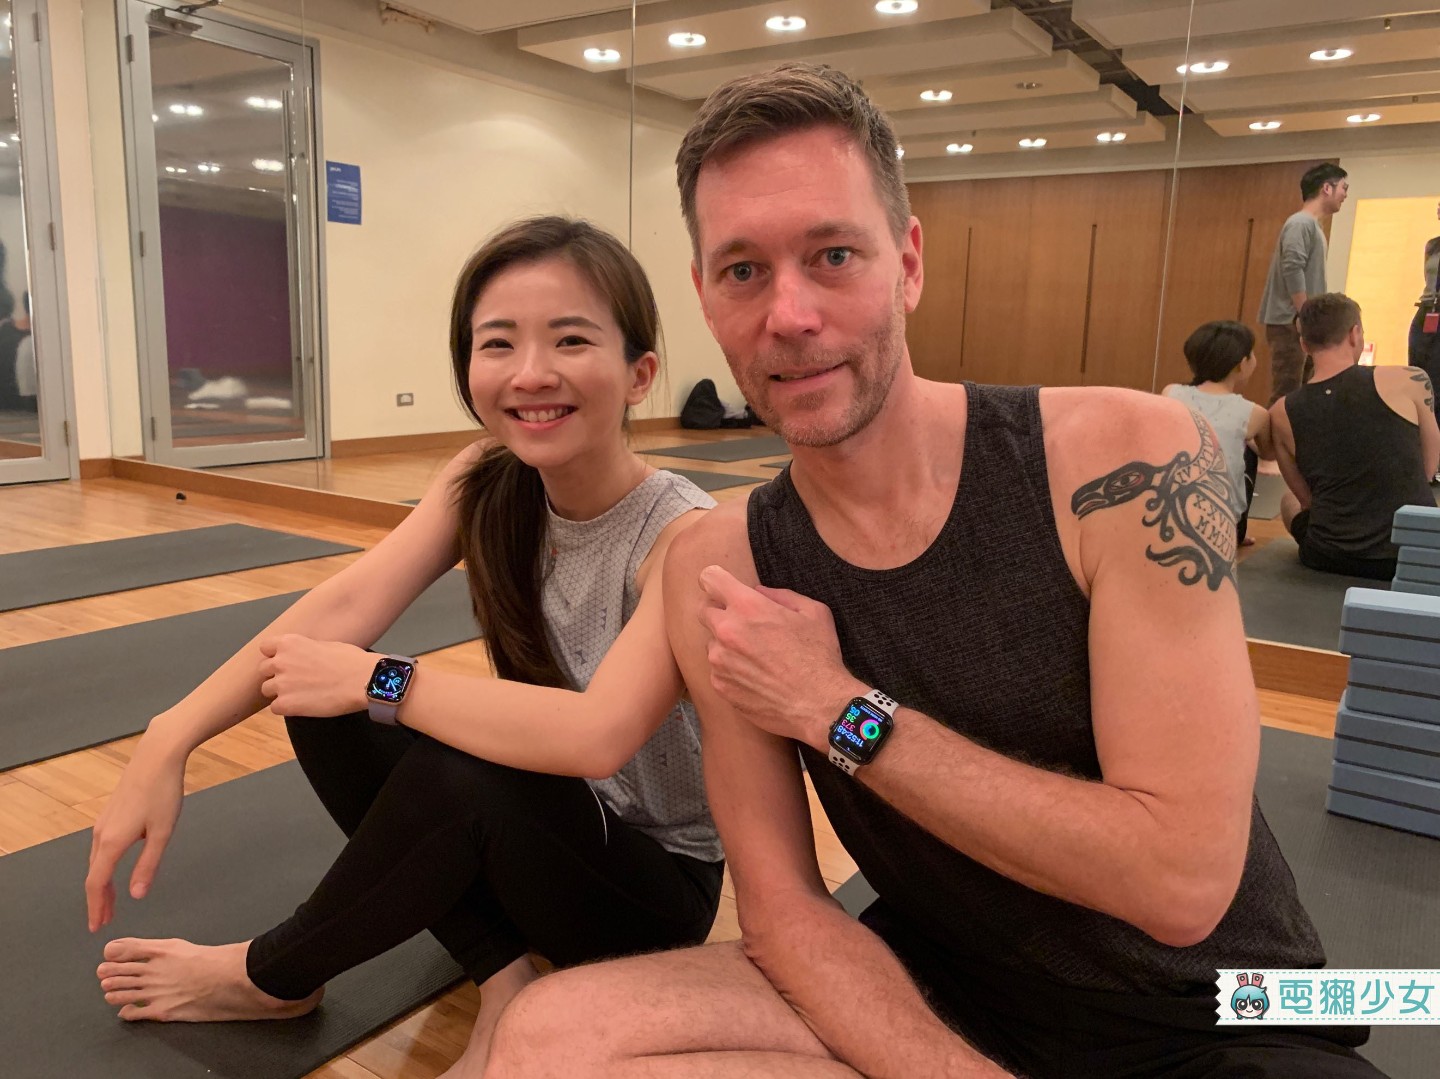 Apple Watch Series 4 全新體能訓練功能「瑜伽」初體驗